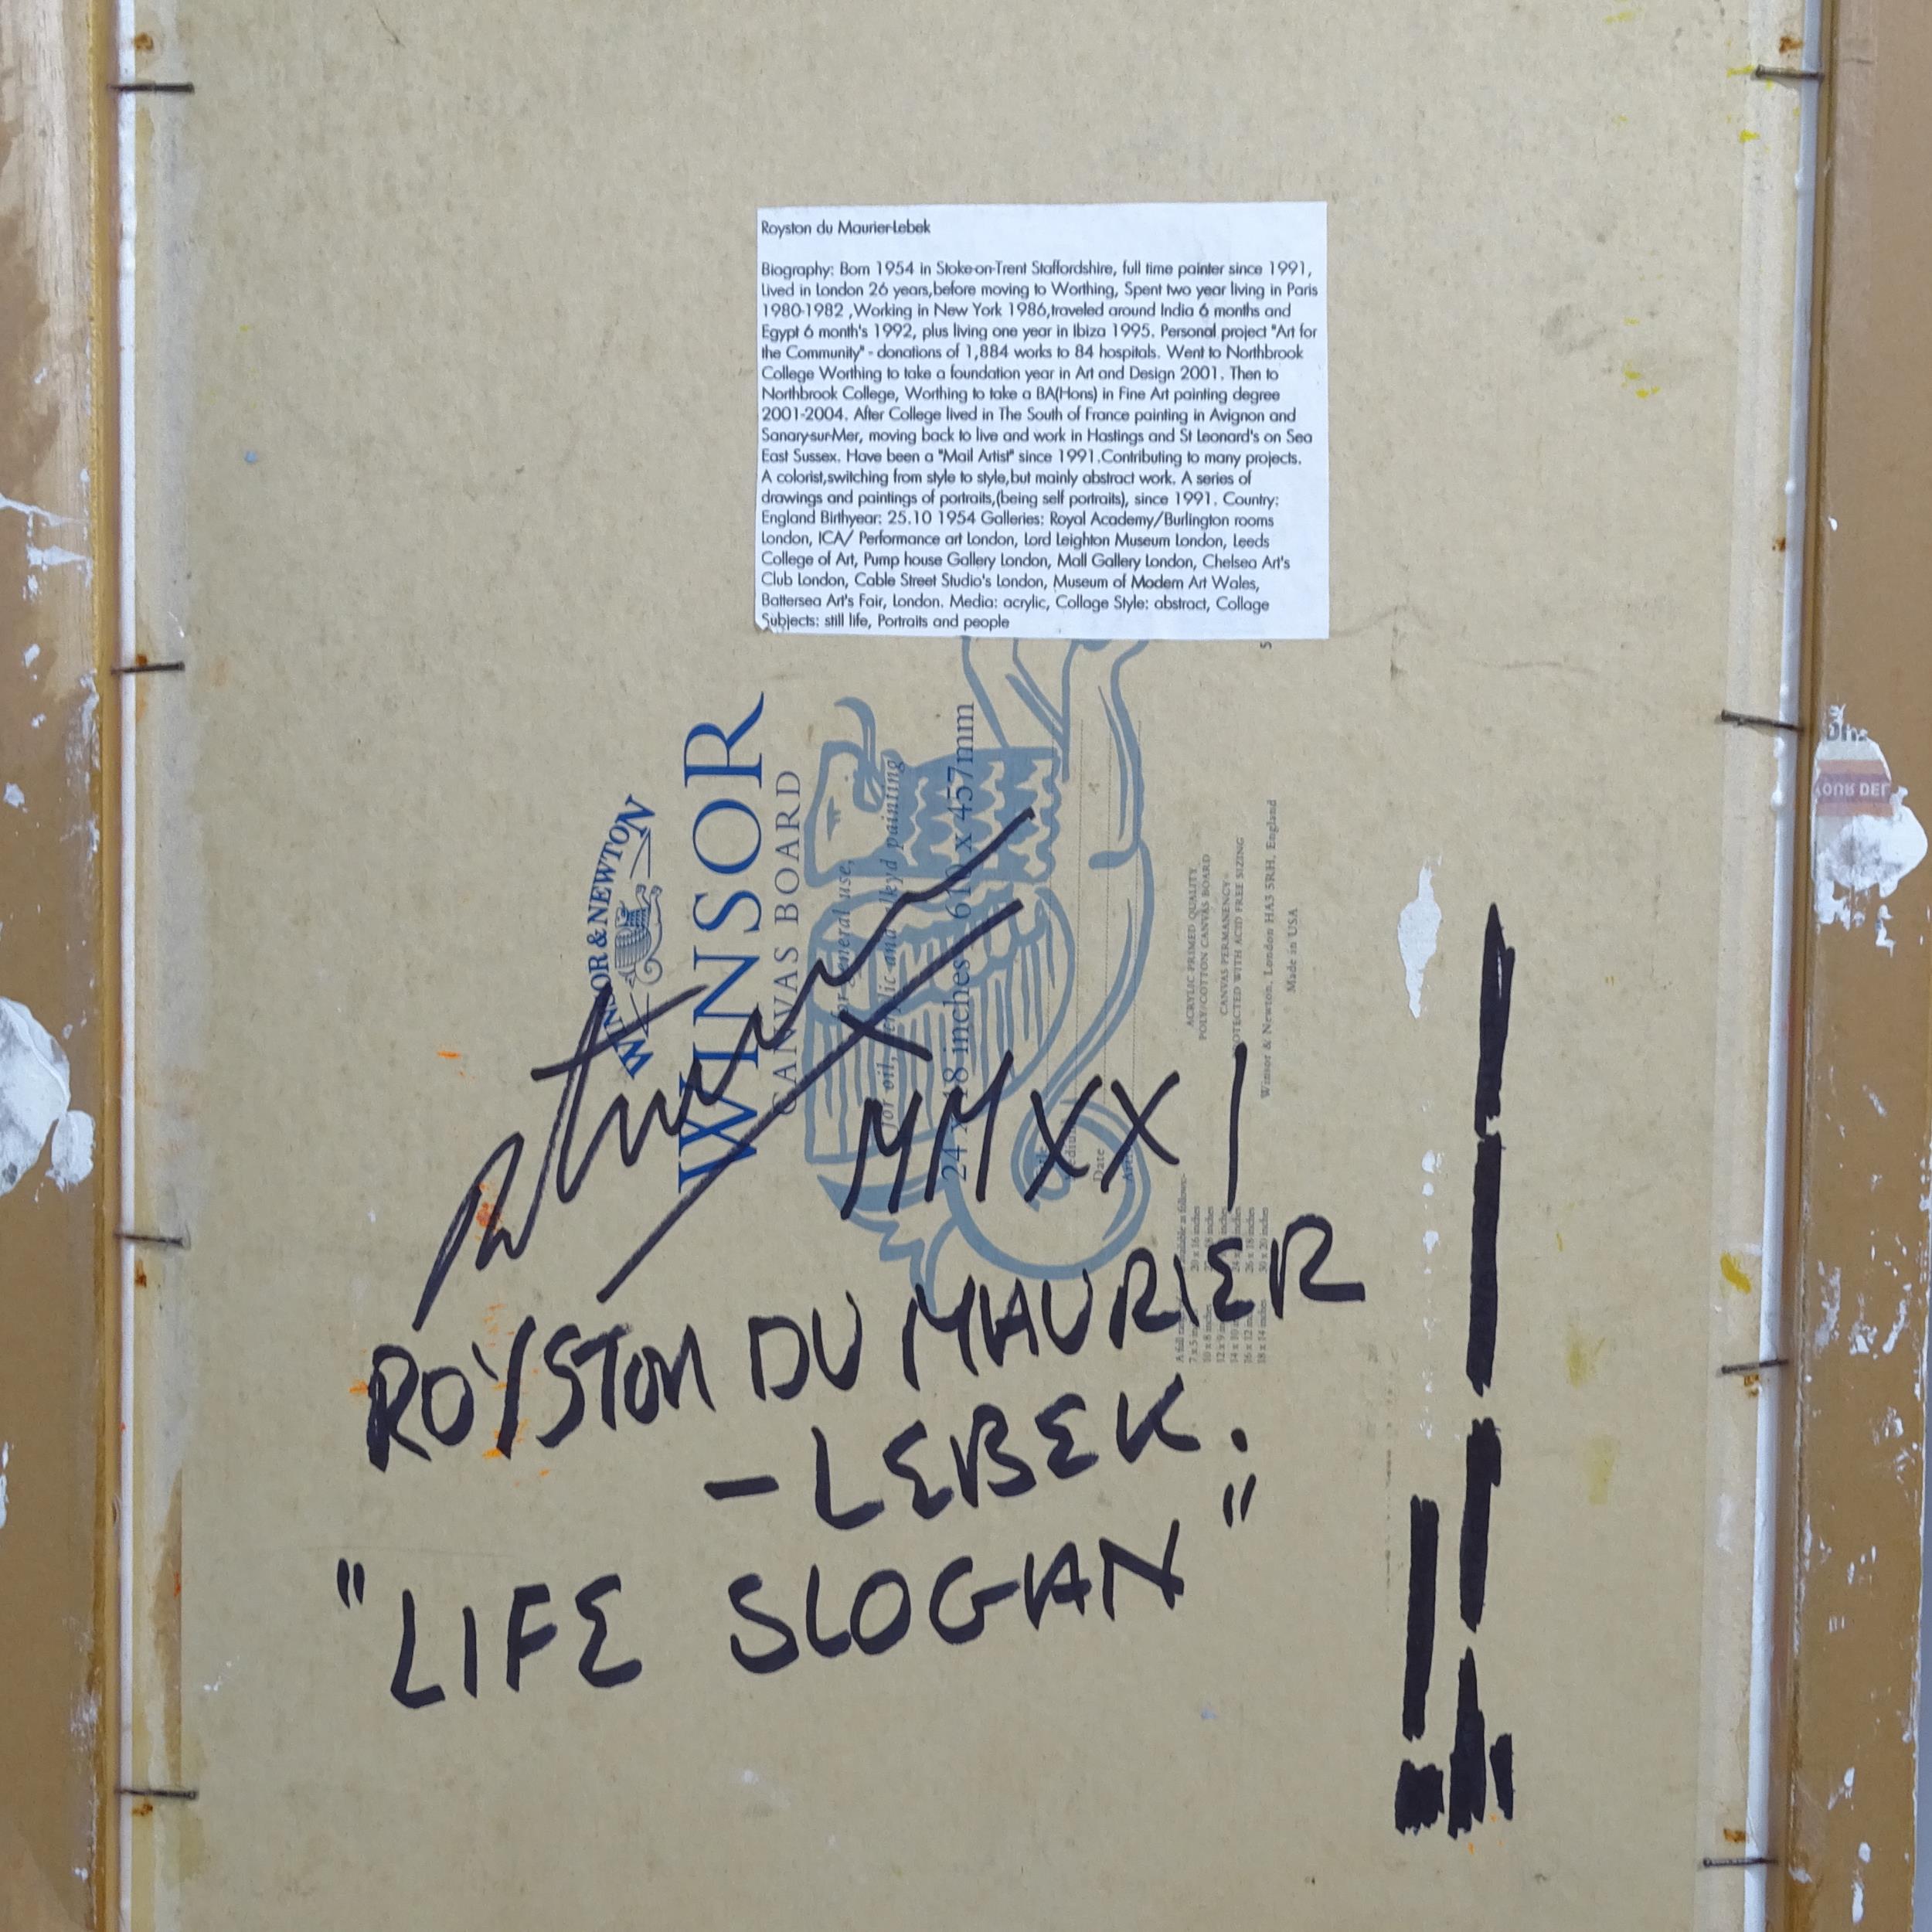 Royston Du Maurier Lebek, oil on board, "life slogan", 68cm x 53cm - Bild 2 aus 2